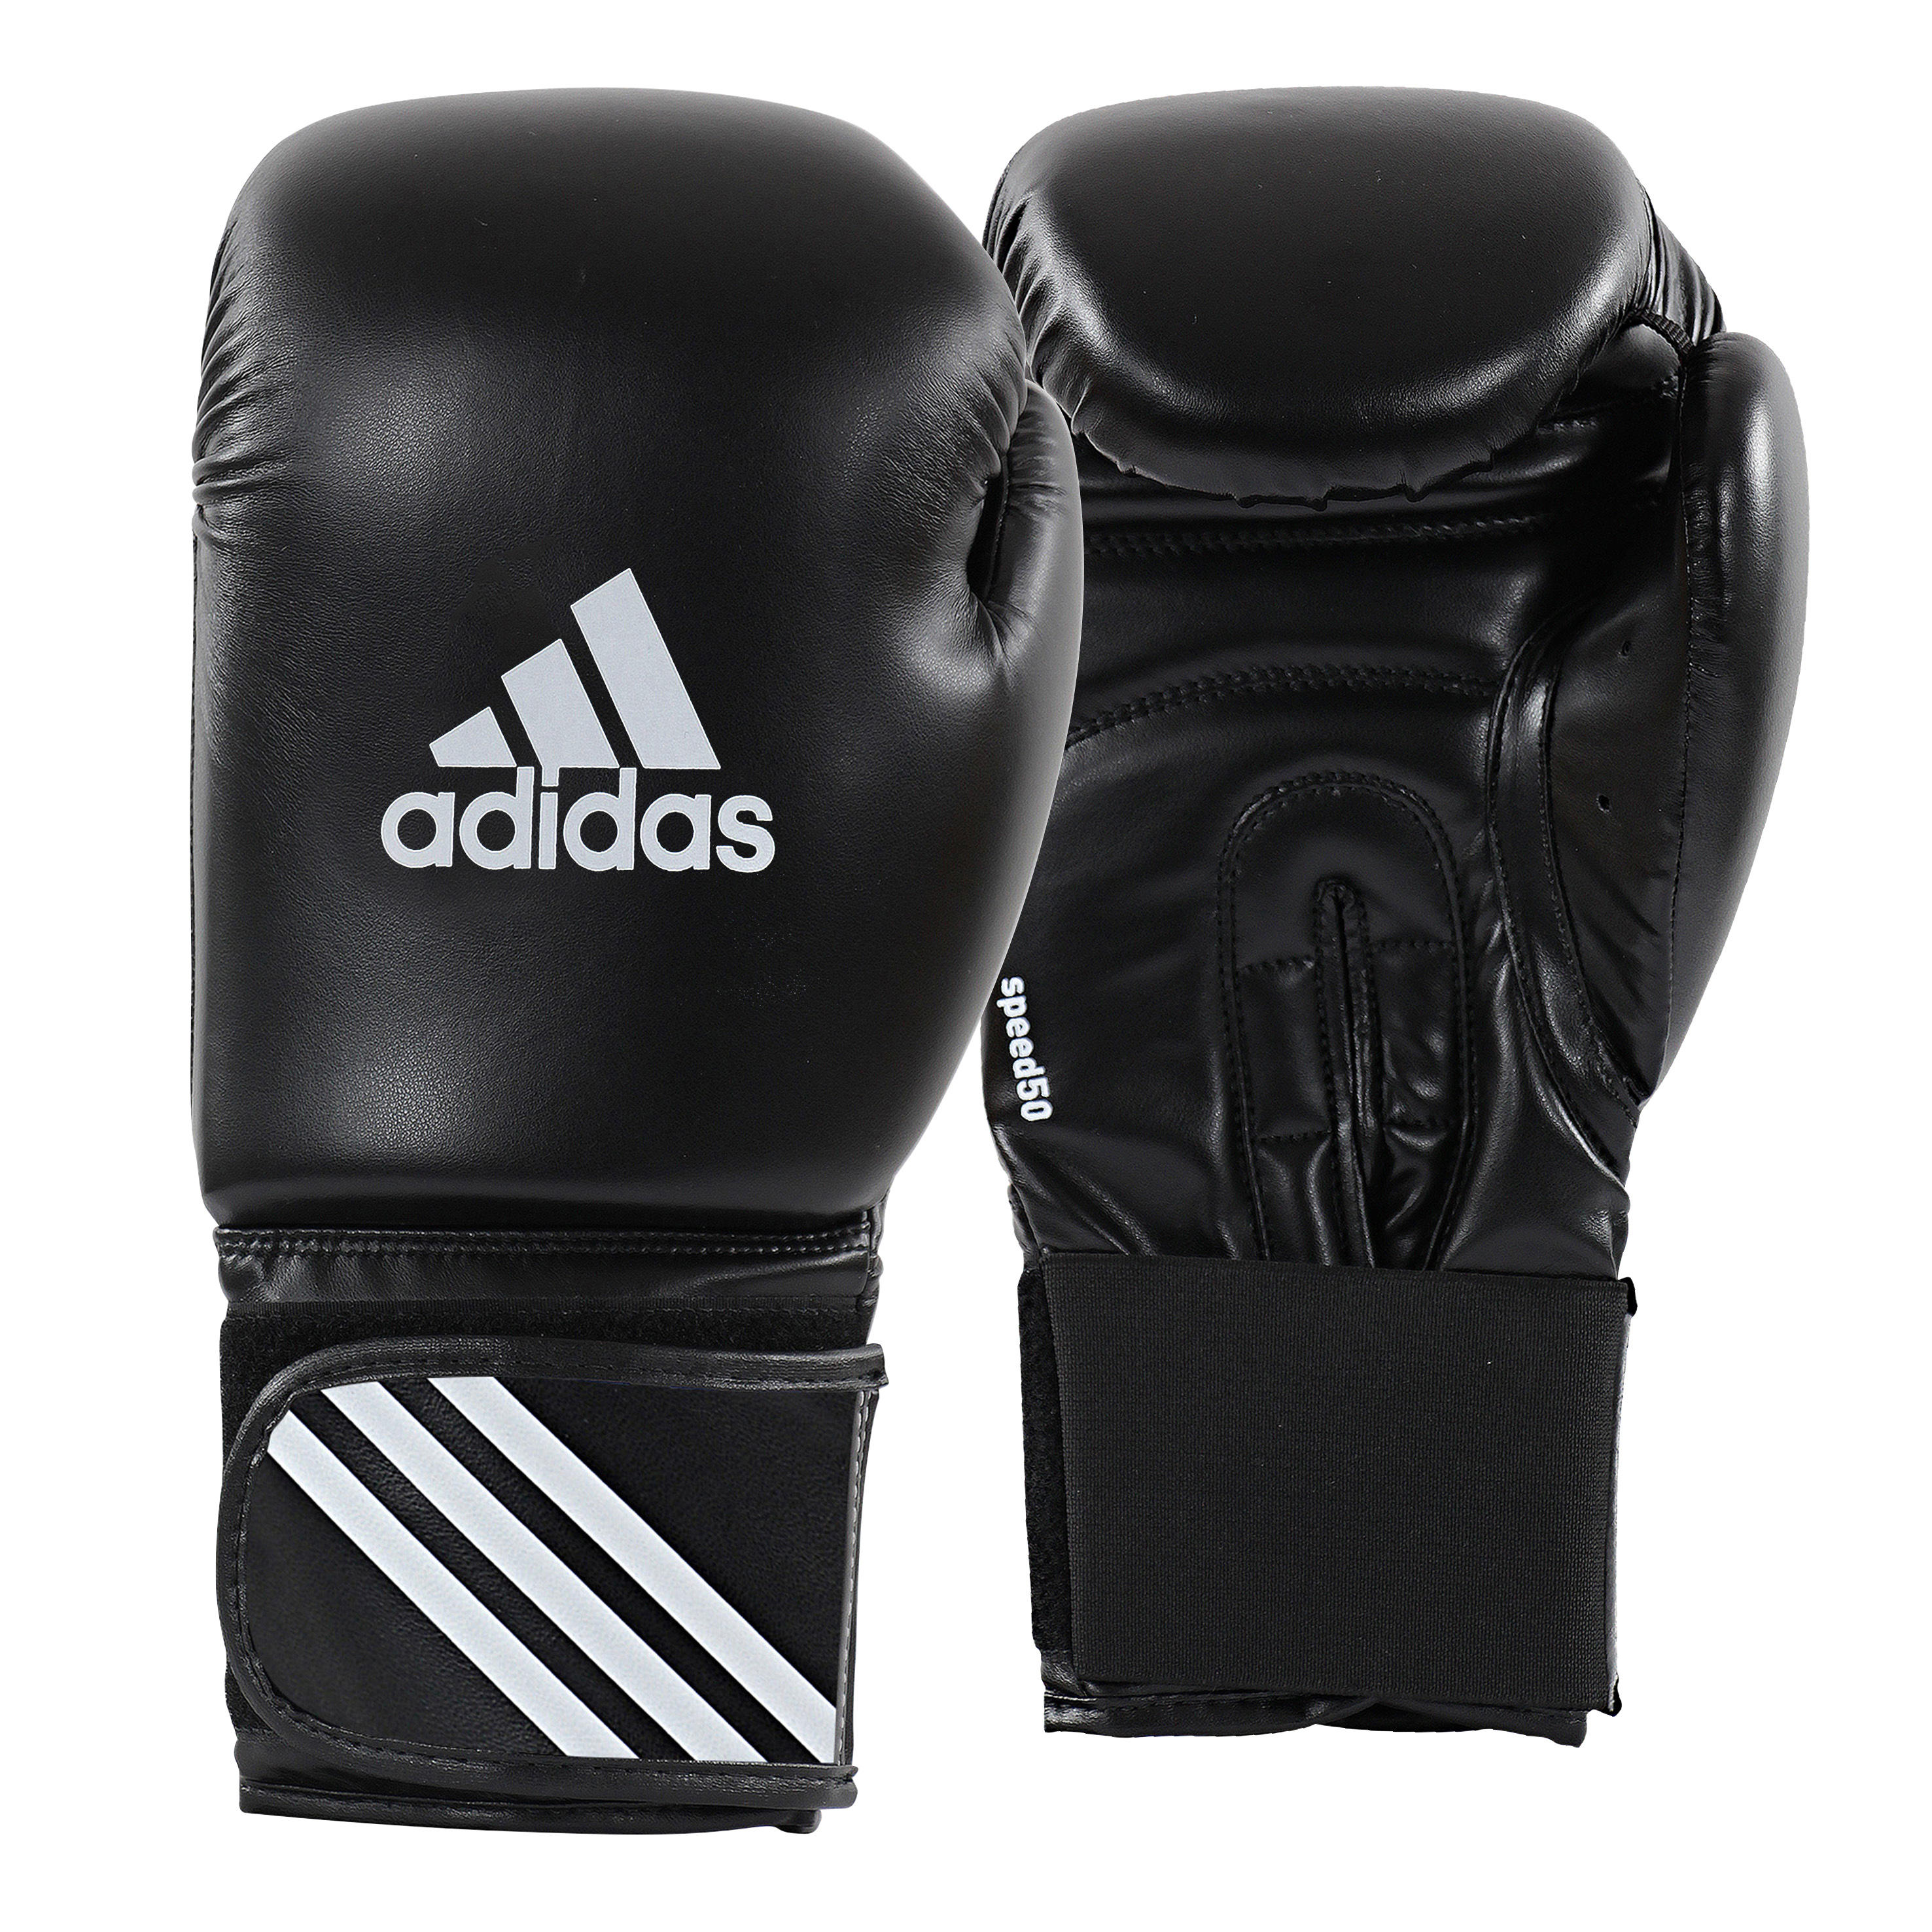 adidas boxing kit